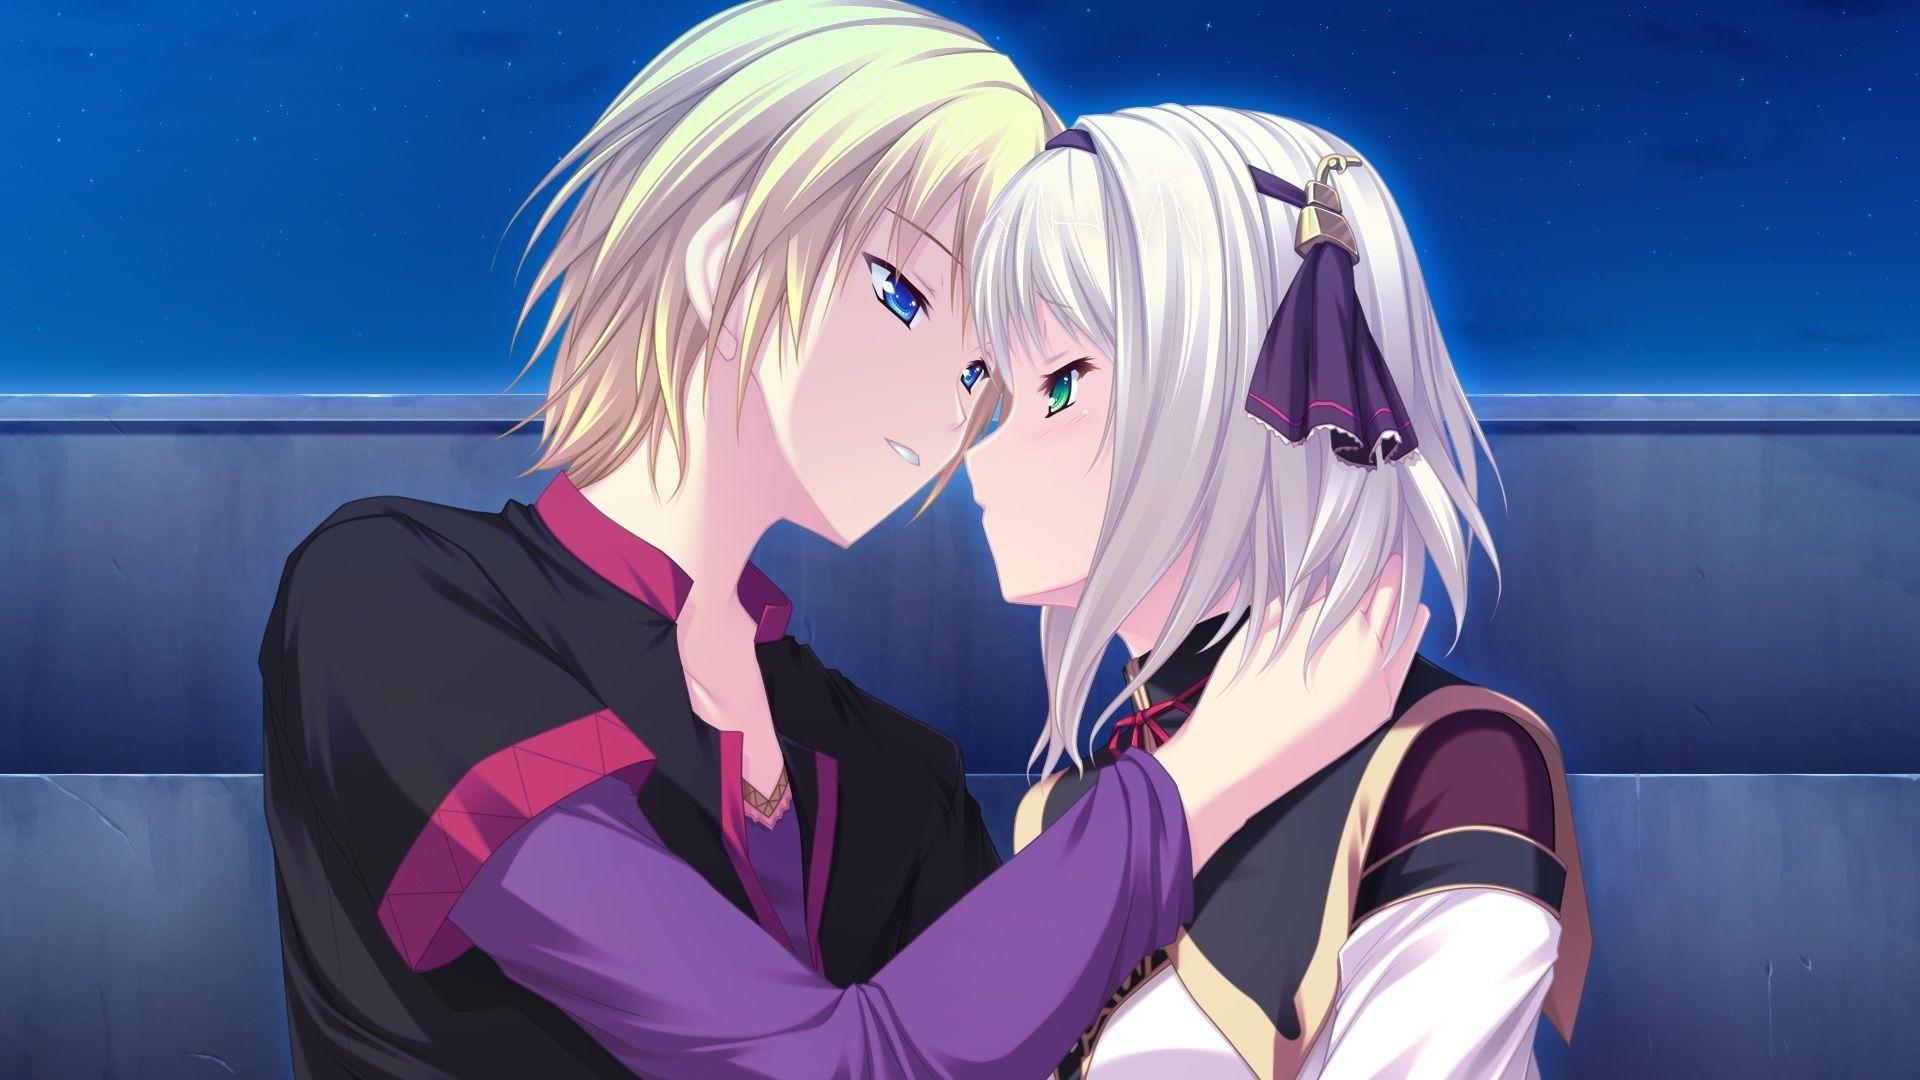 Romantic Couple. HD Anime Wallpaper for Mobile and Desktop